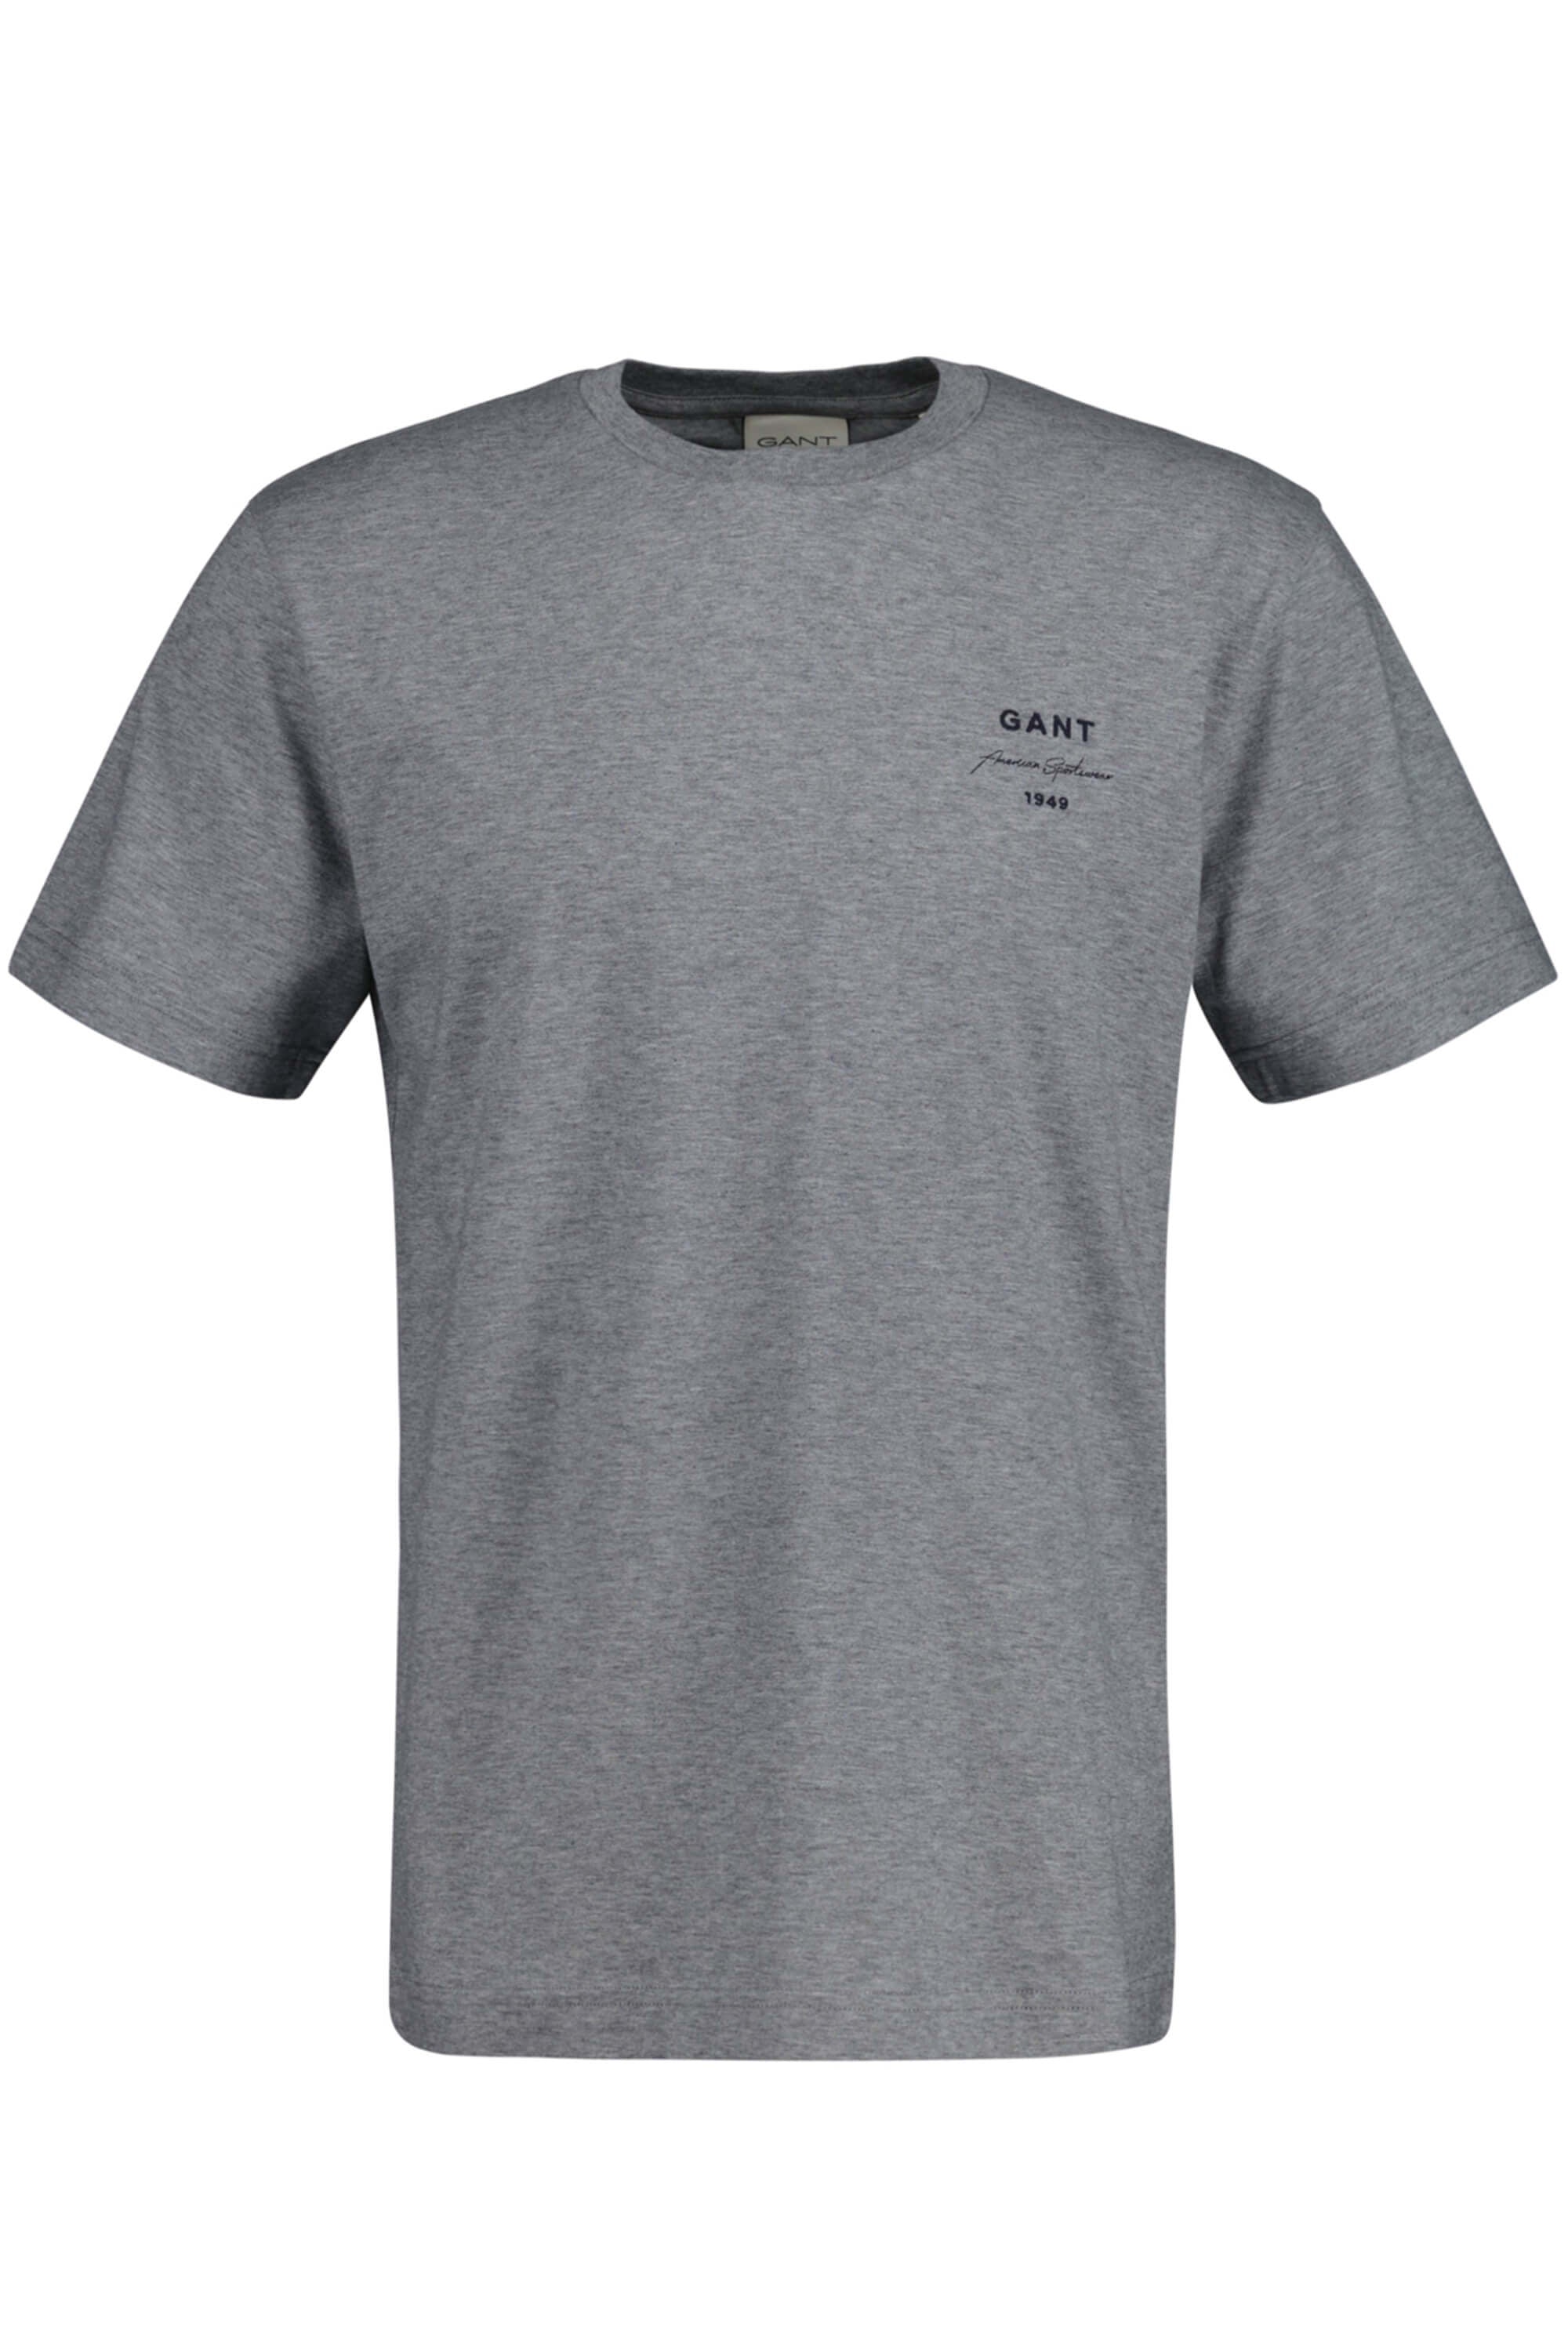 Gant Logo Script T-Shirt Grey